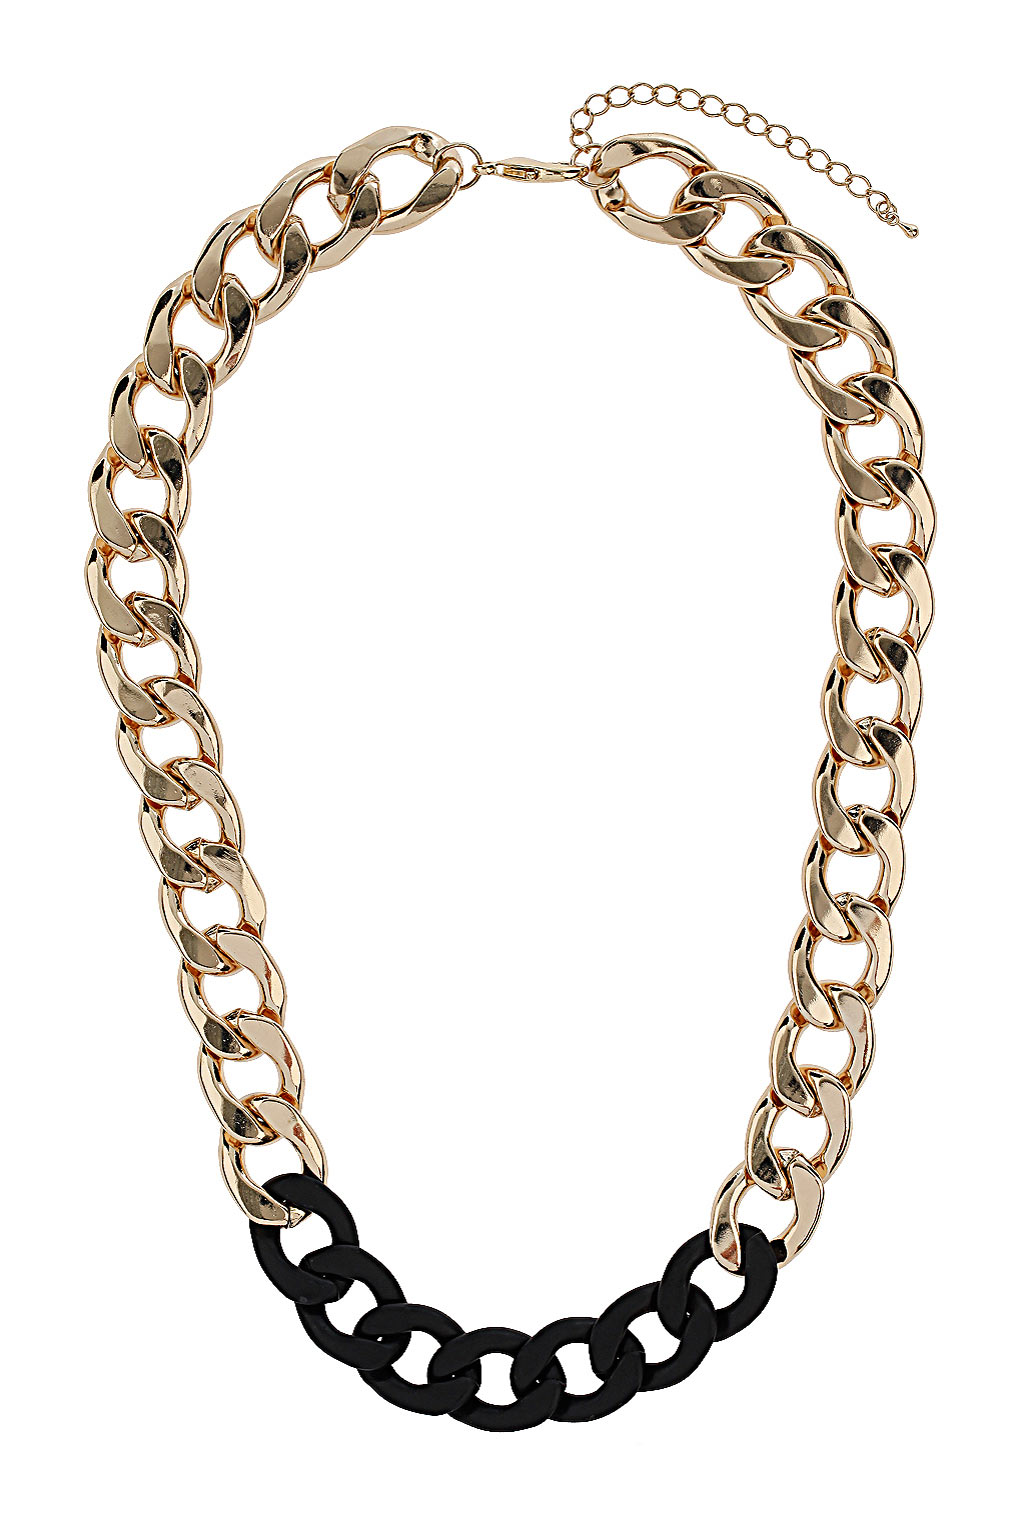 Another kinda fashion blog: Chain me up OMG!